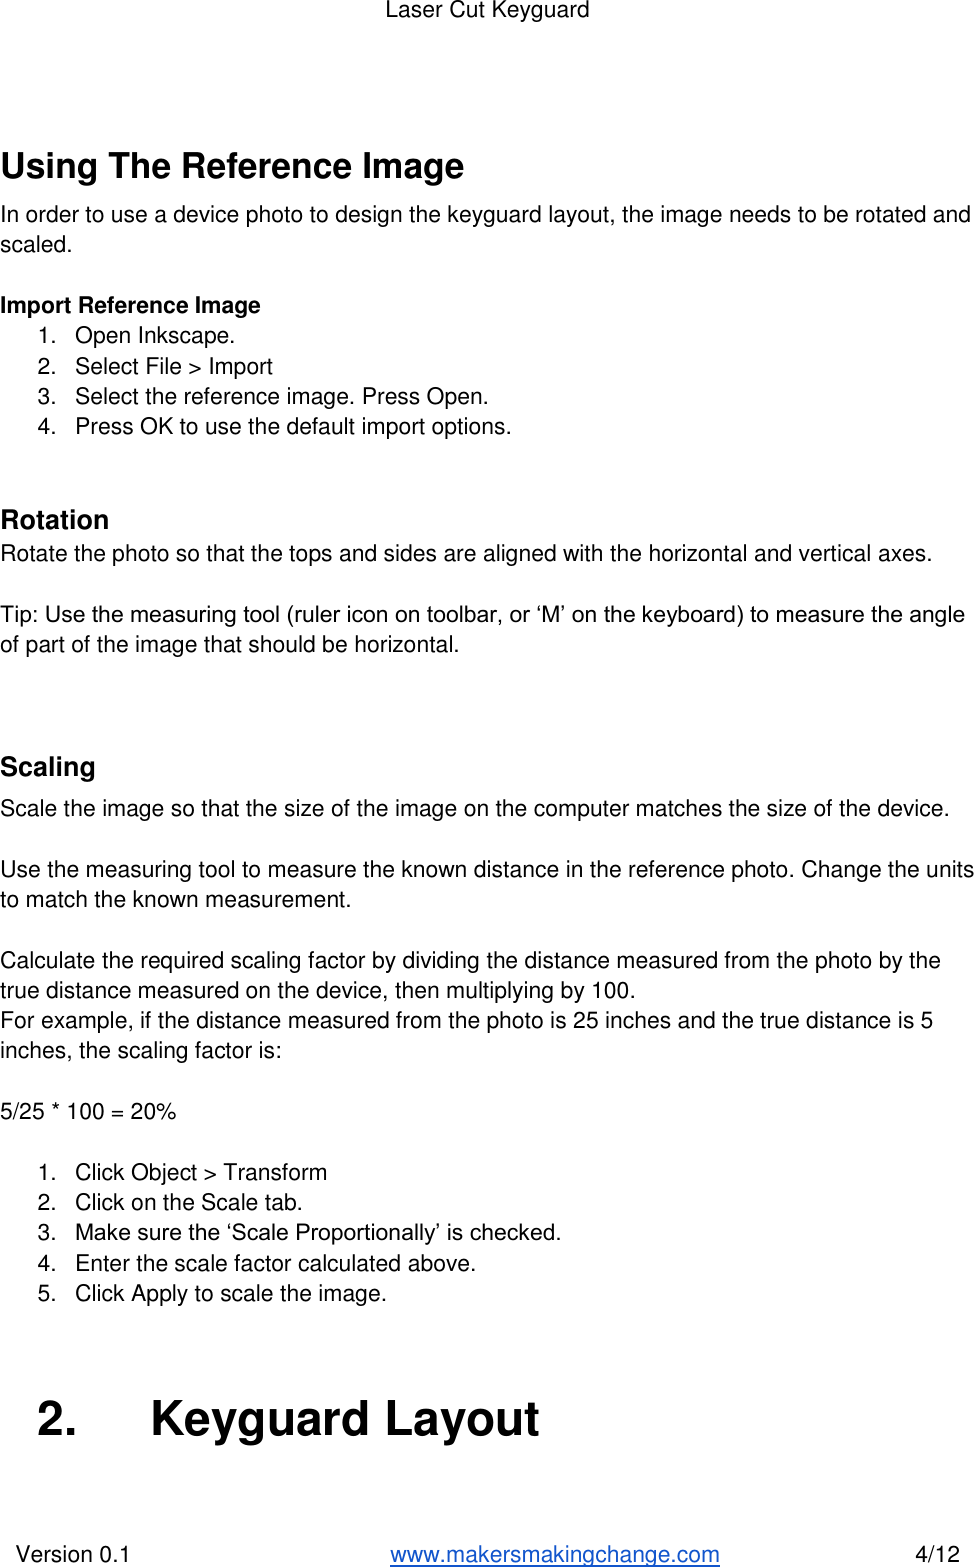 Page 4 of 12 - Lasercut Keyguard Instructions V0.1